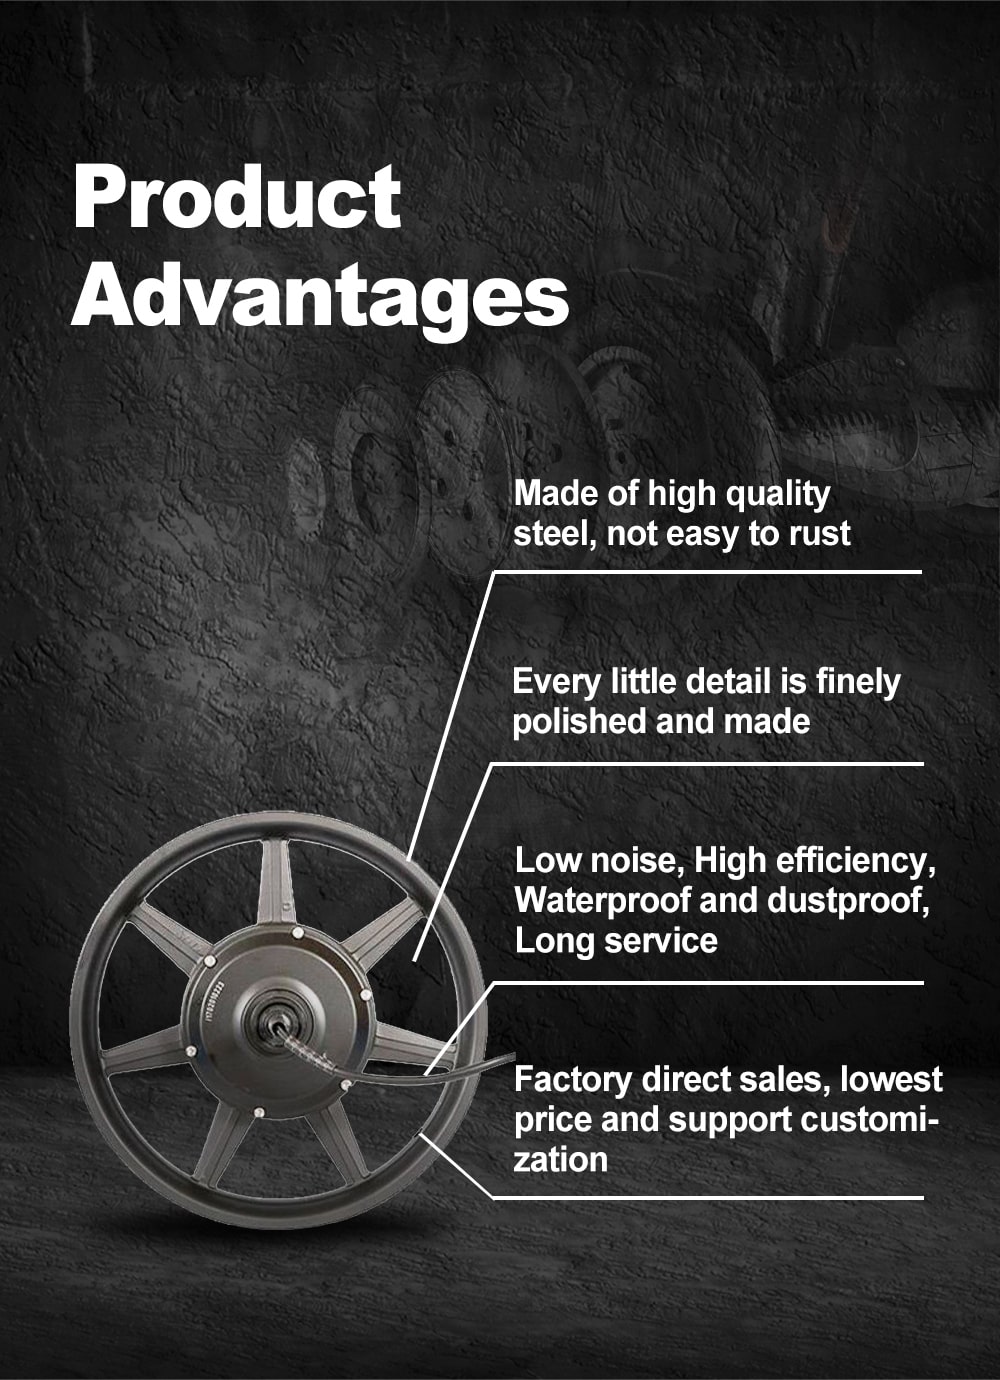 14 inch gearless hub motor advantages